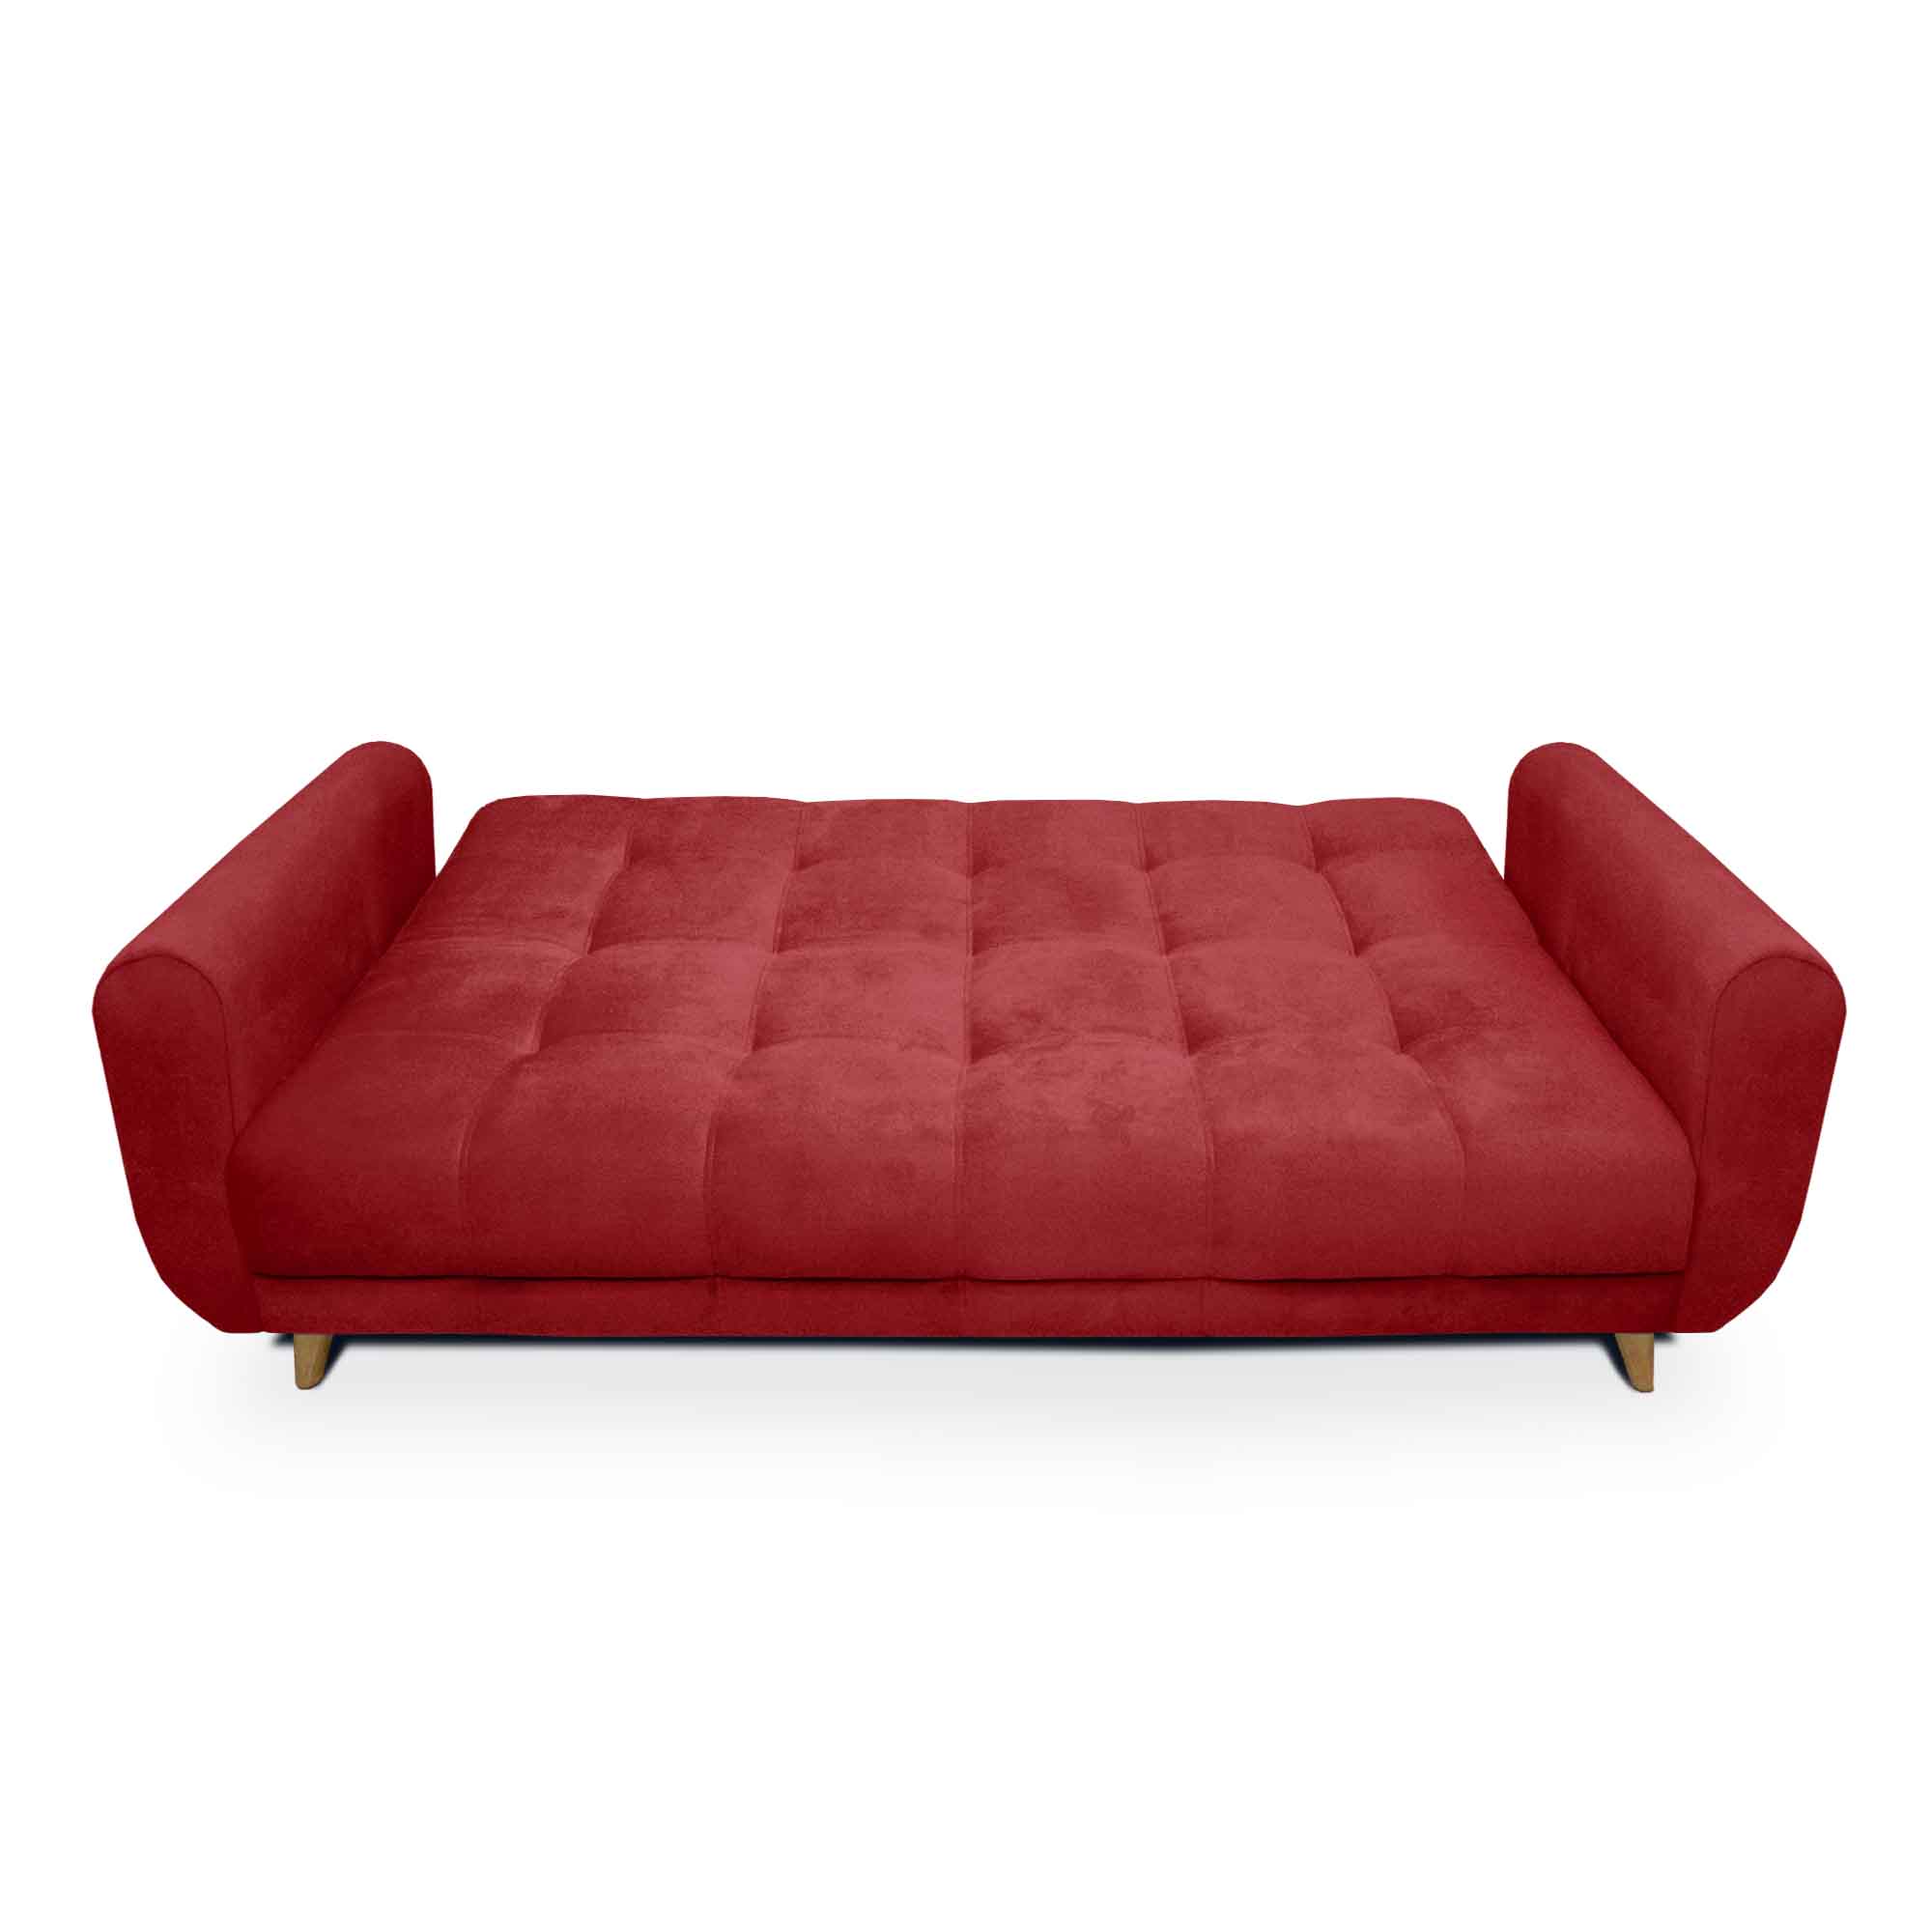 Sofa Cama Comfort Sistema Clic Clac Color Rojo (3)